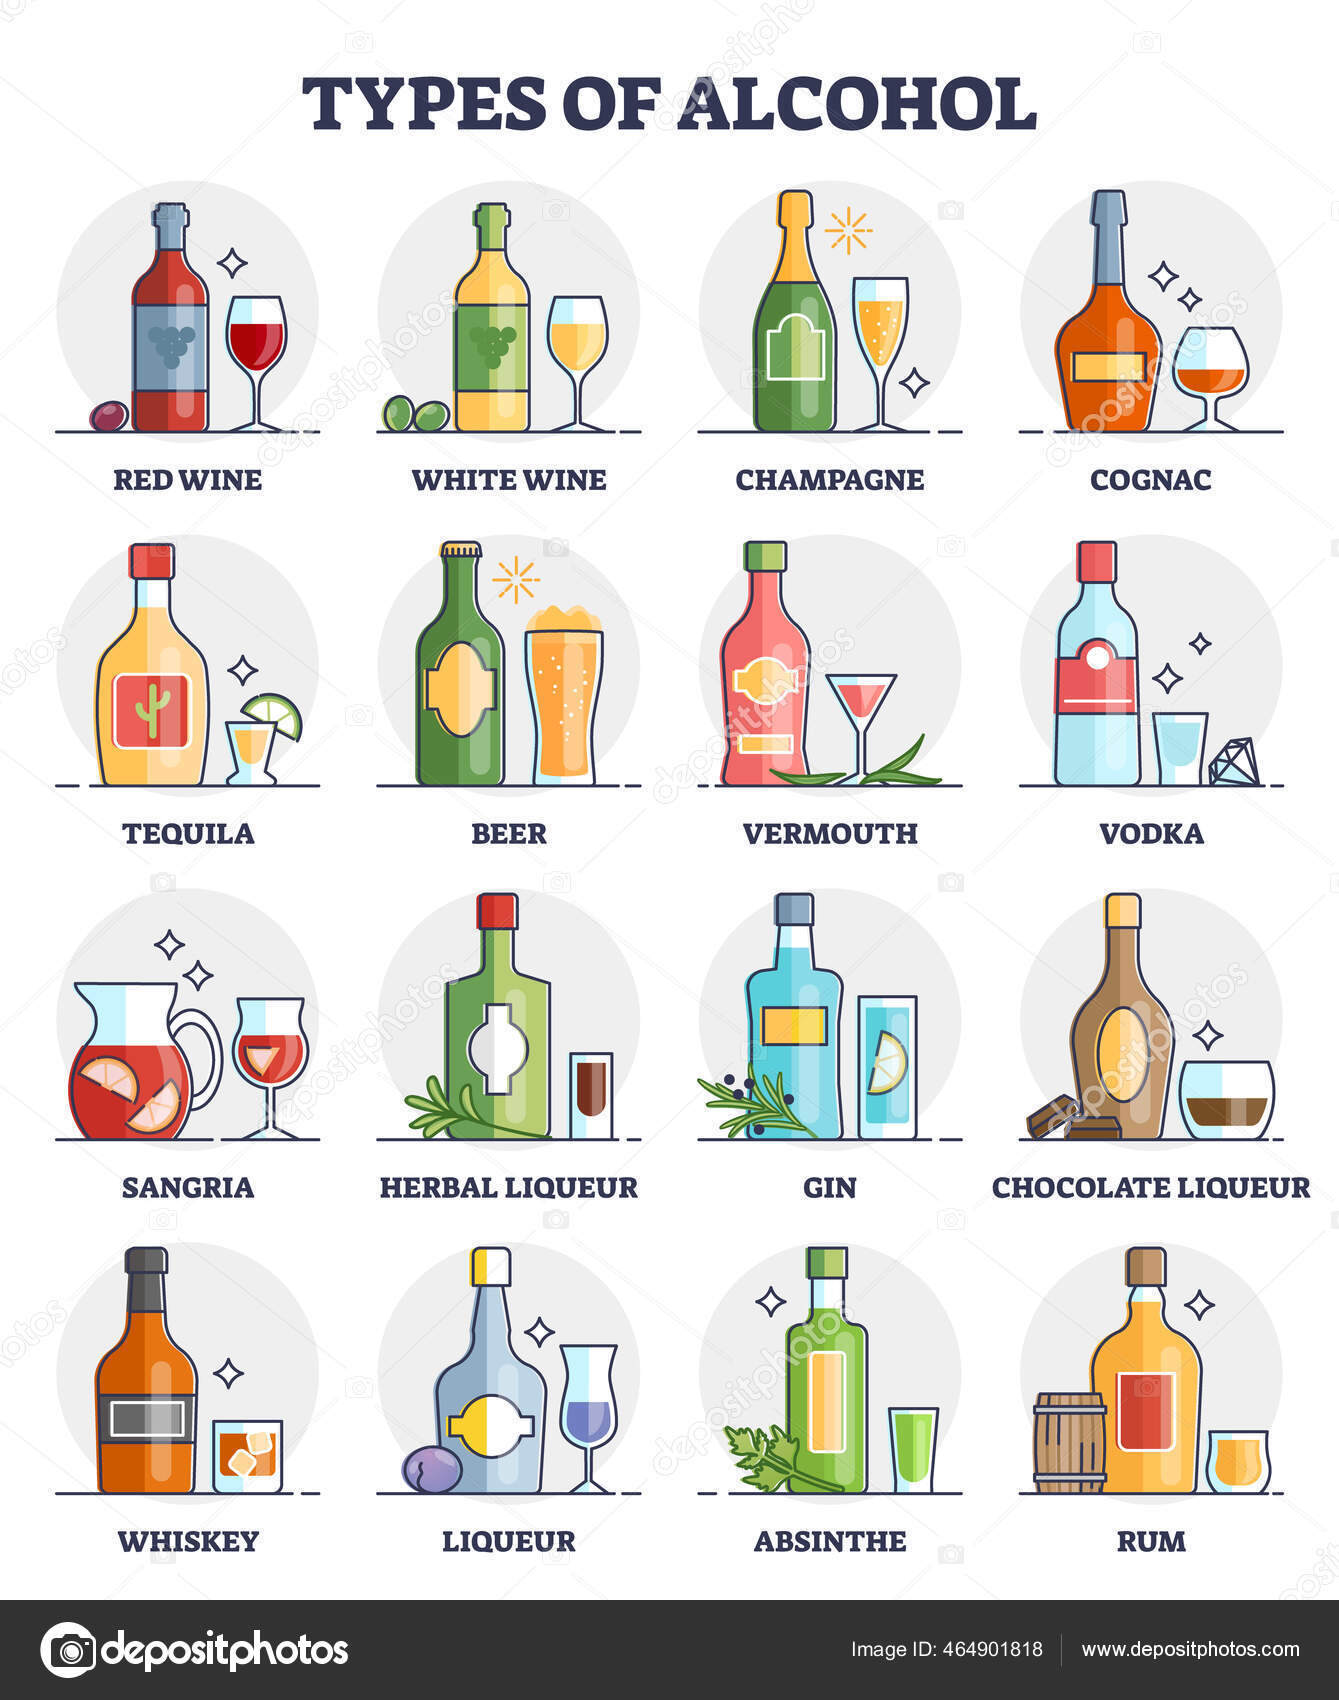 https://st2.depositphotos.com/3900811/46490/v/1600/depositphotos_464901818-stock-illustration-types-of-alcohol-and-drinks.jpg